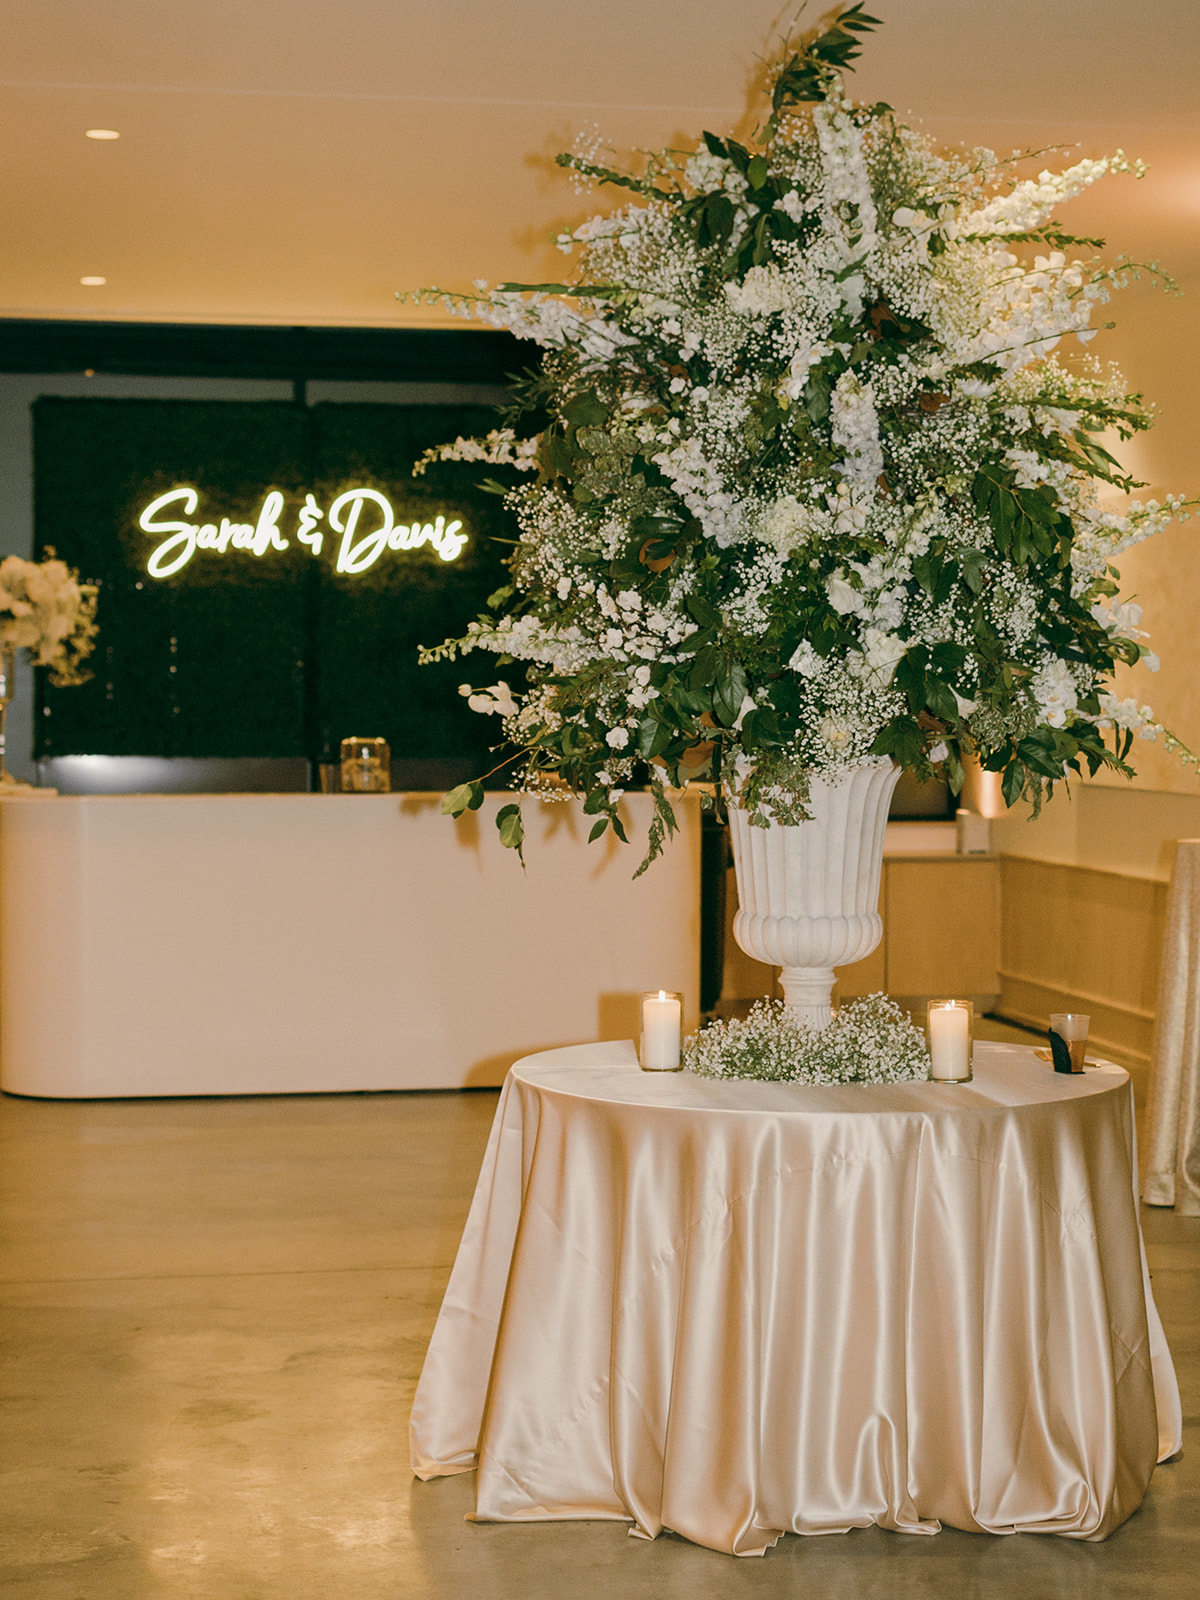 The bride and groom's custom neon sign hangs above the sleek white bar. 